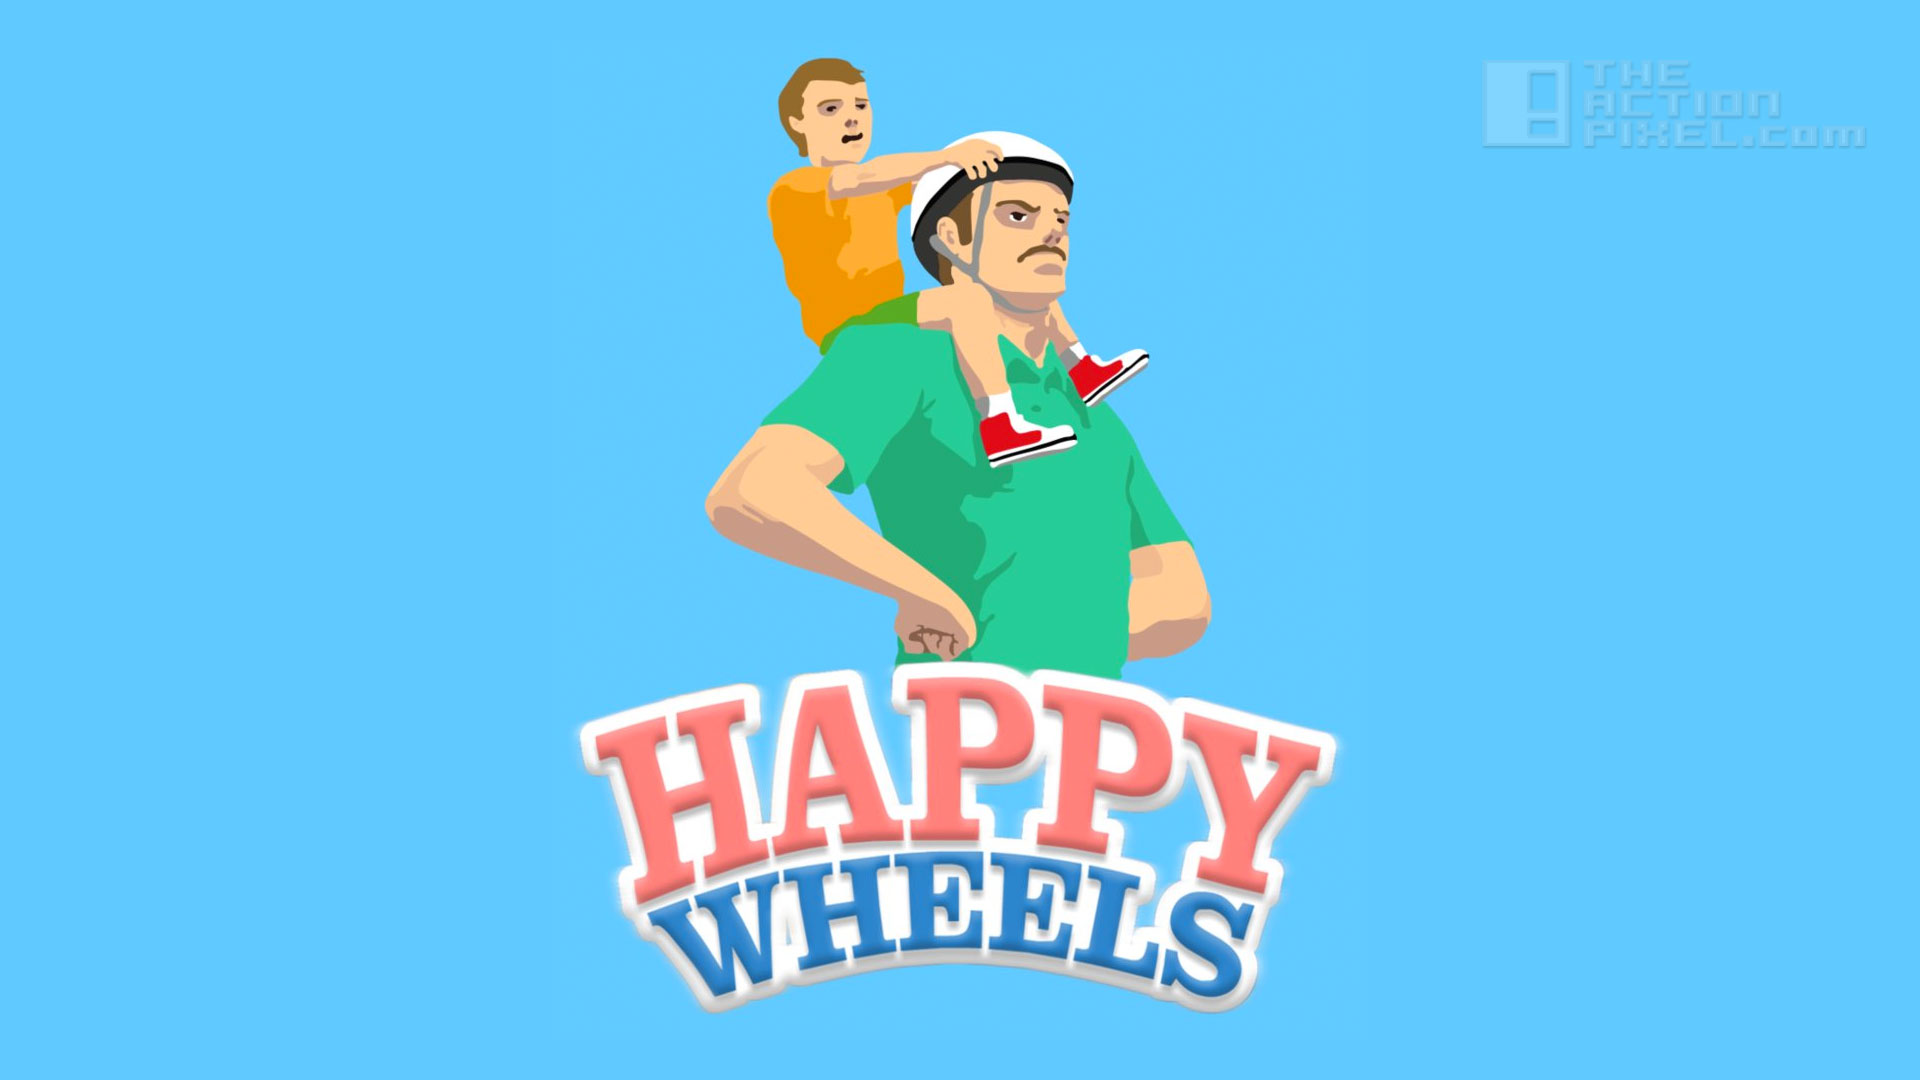 http://www.theactionpixel.com/wp-content/uploads/2015/05/happywheels.jpg